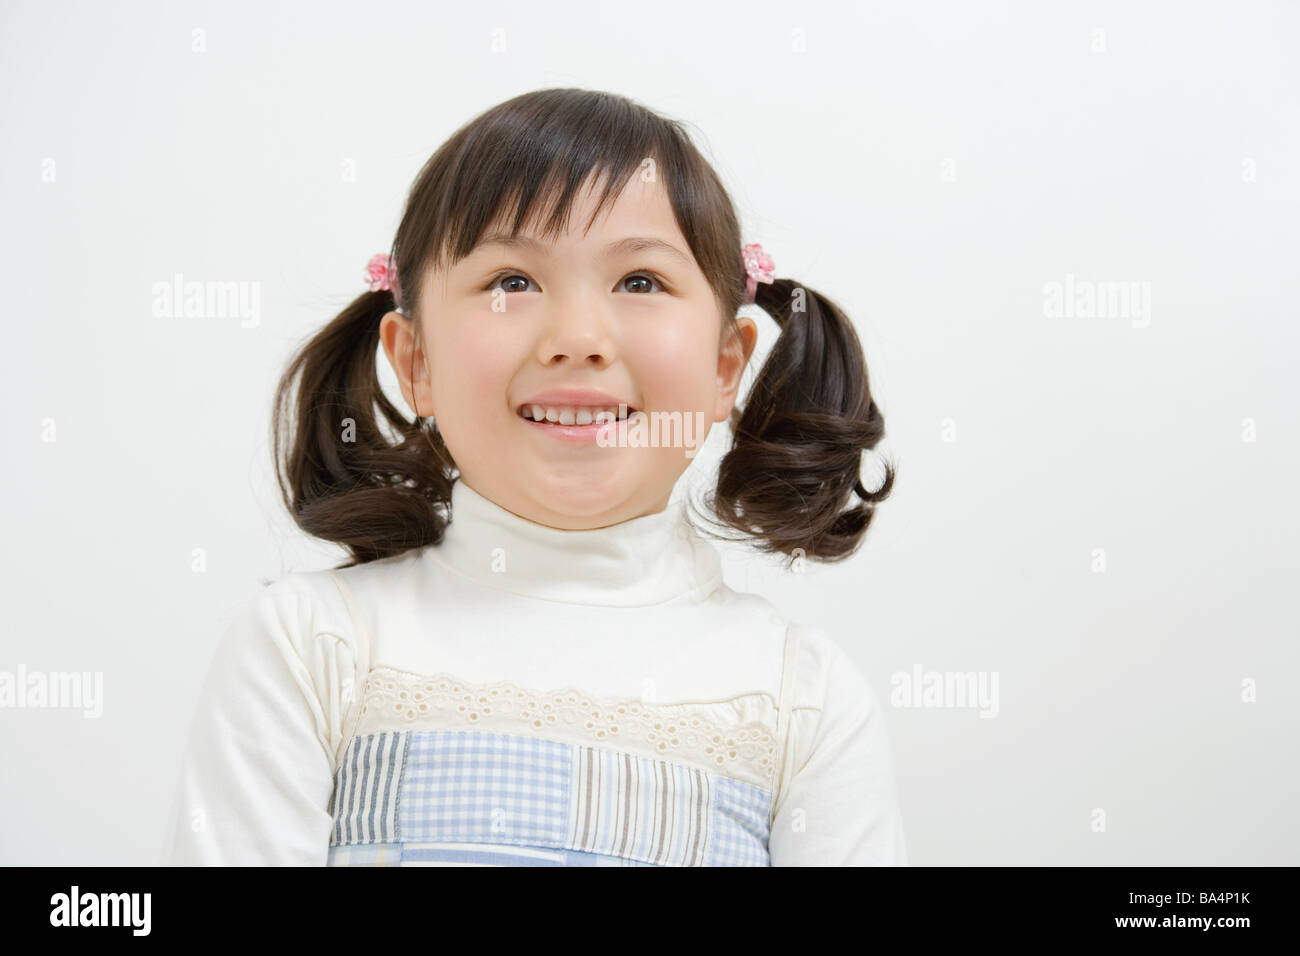 Asian girl smiling, portrait Banque D'Images